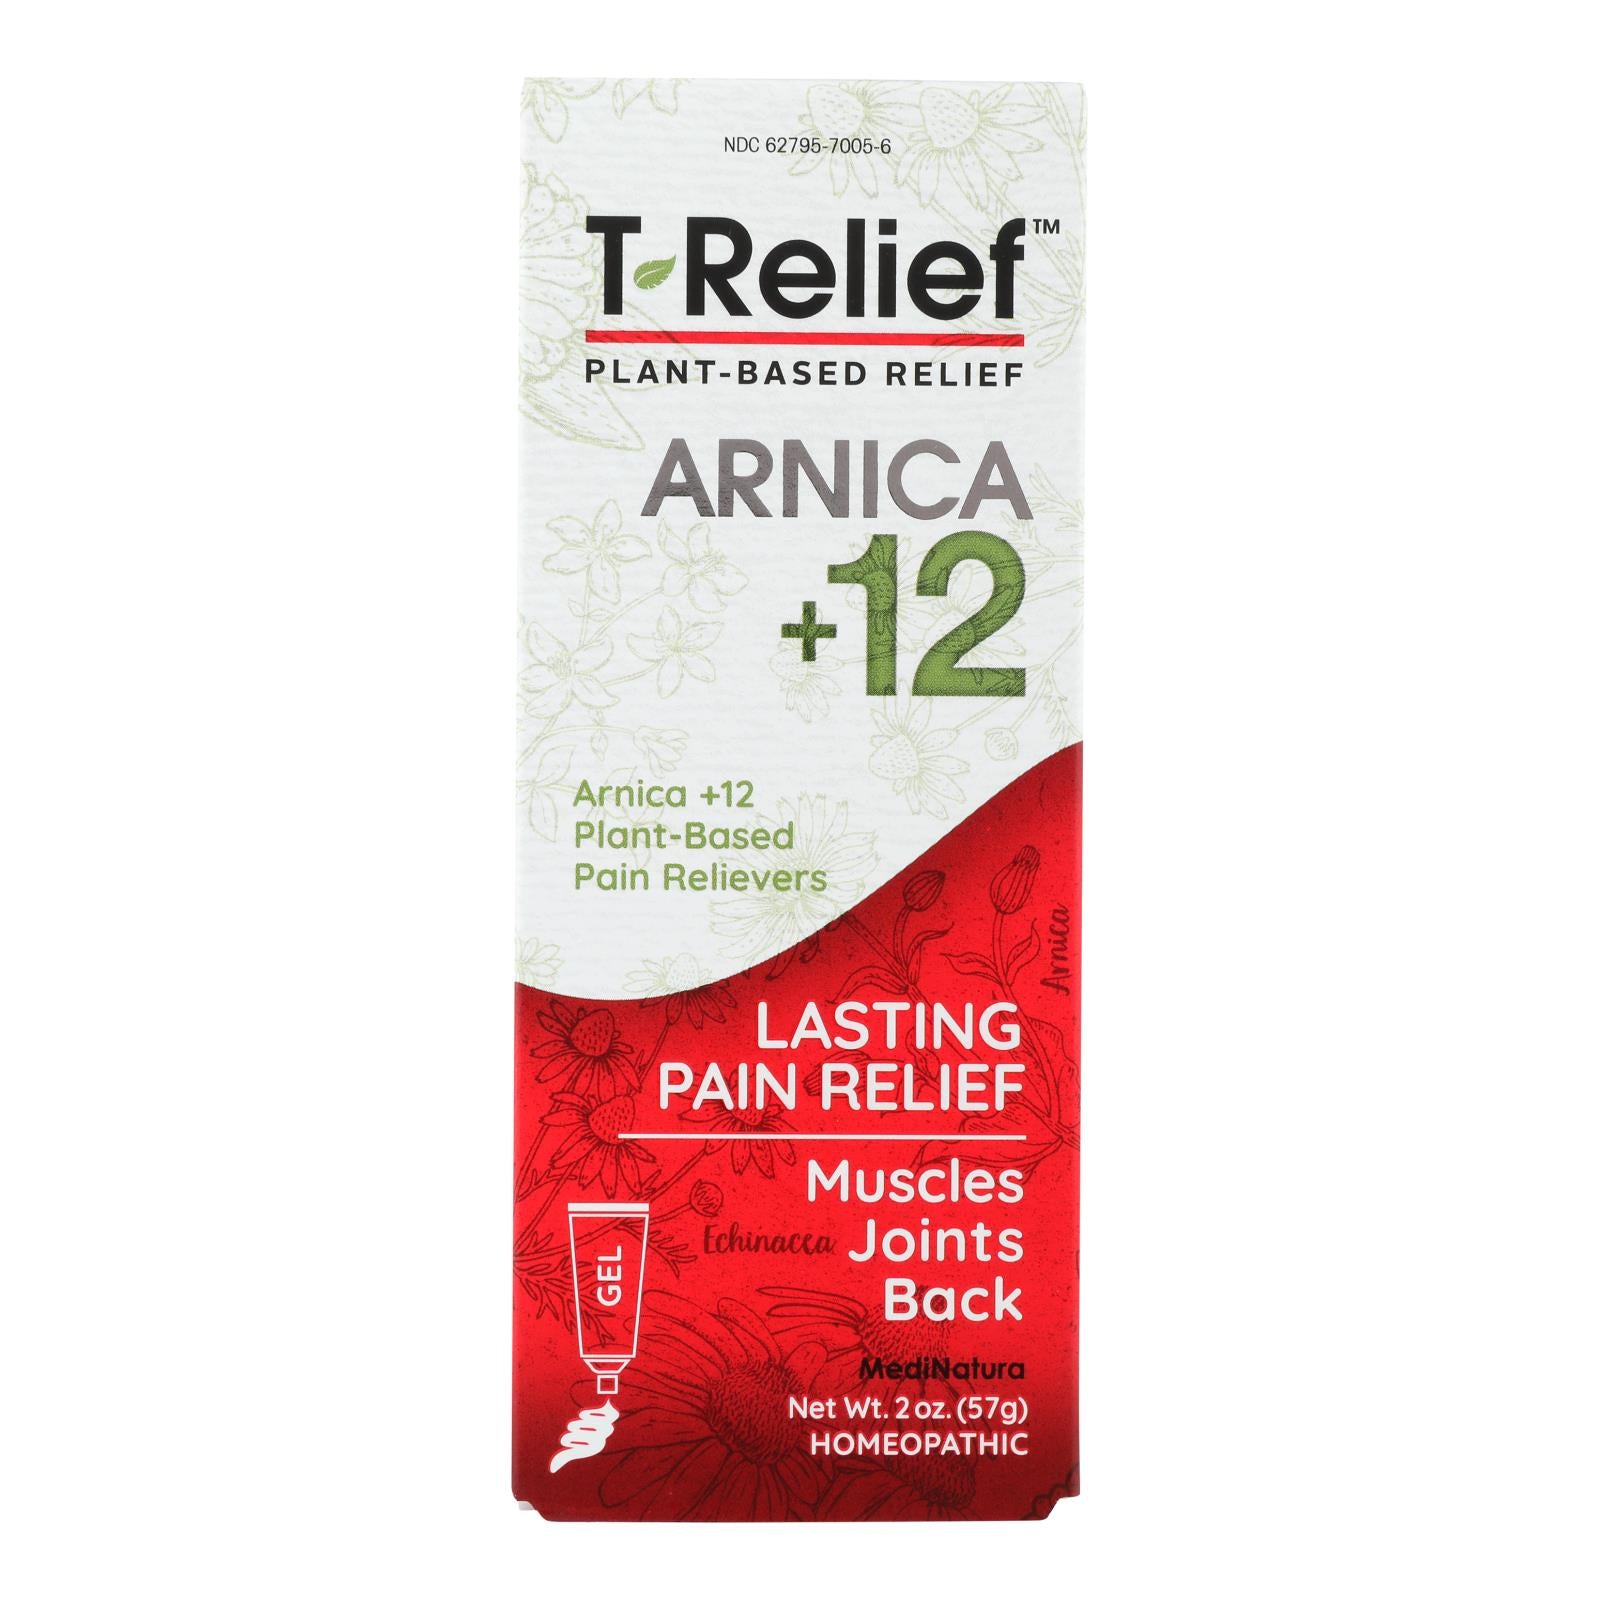 T-relief - Pain Relief Gel - Arnica Plus 12 Natural Ingredients - 1.76 Oz